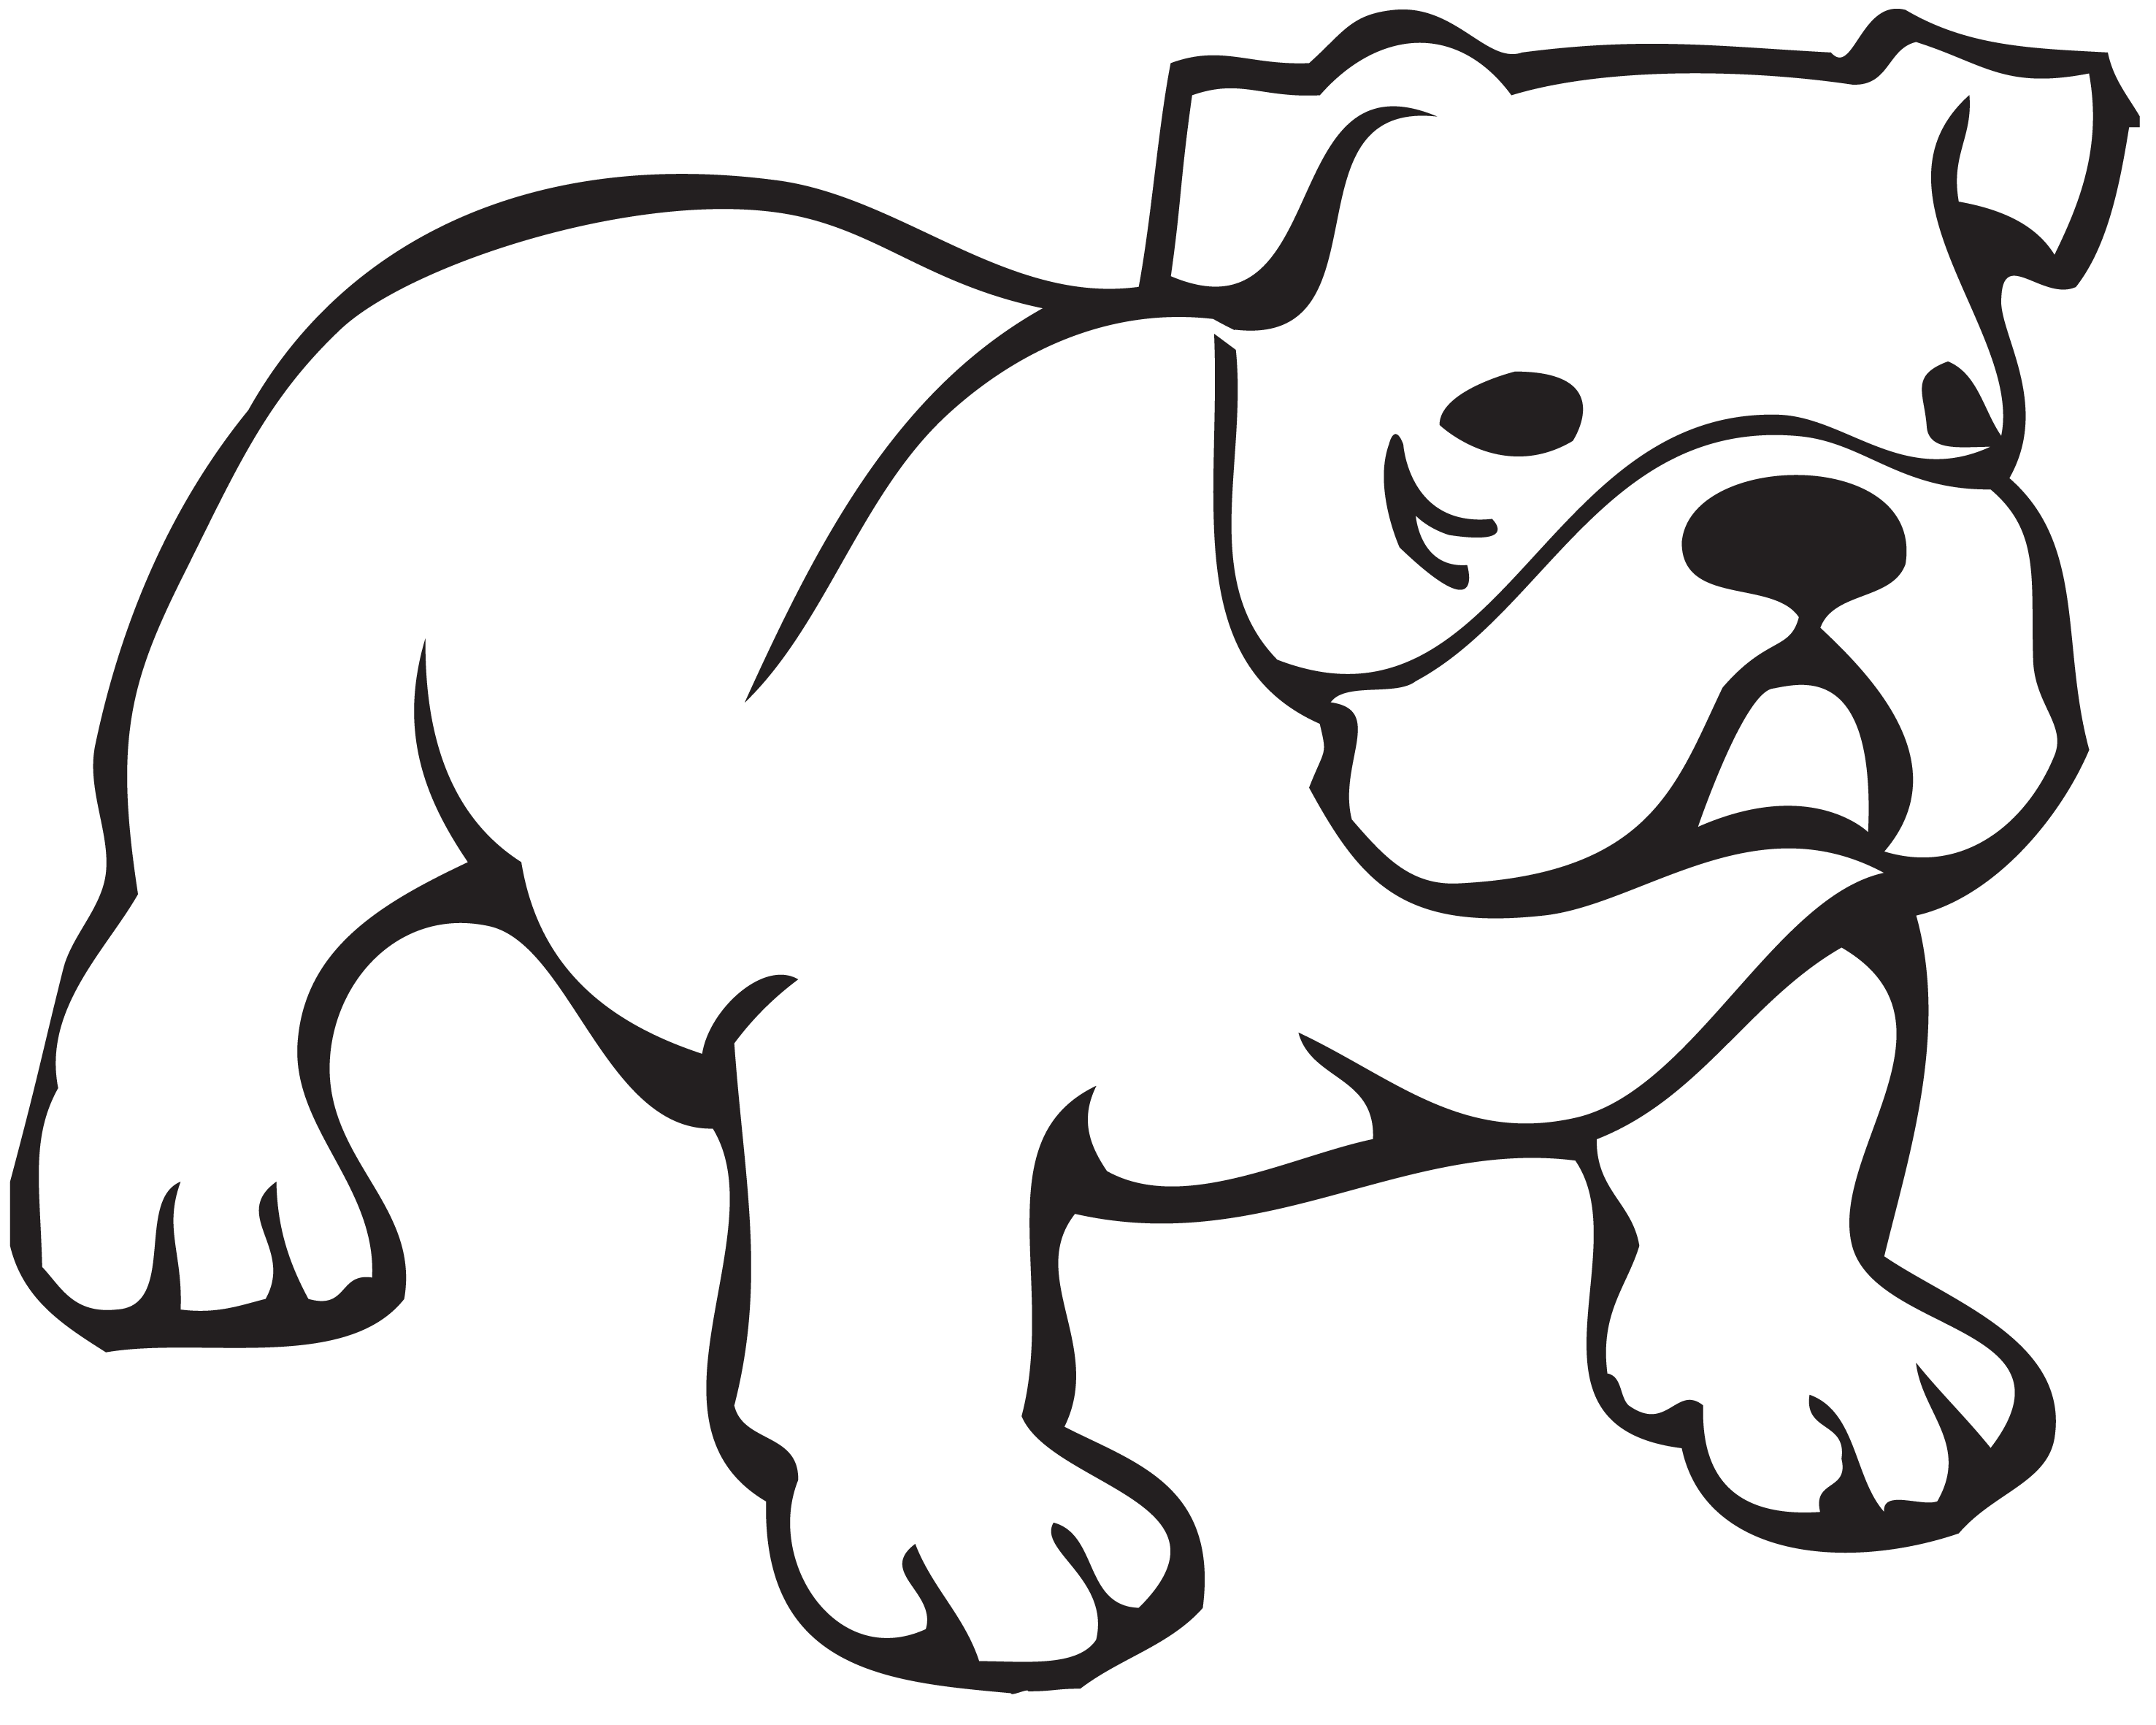 Bulldog images clip art - .